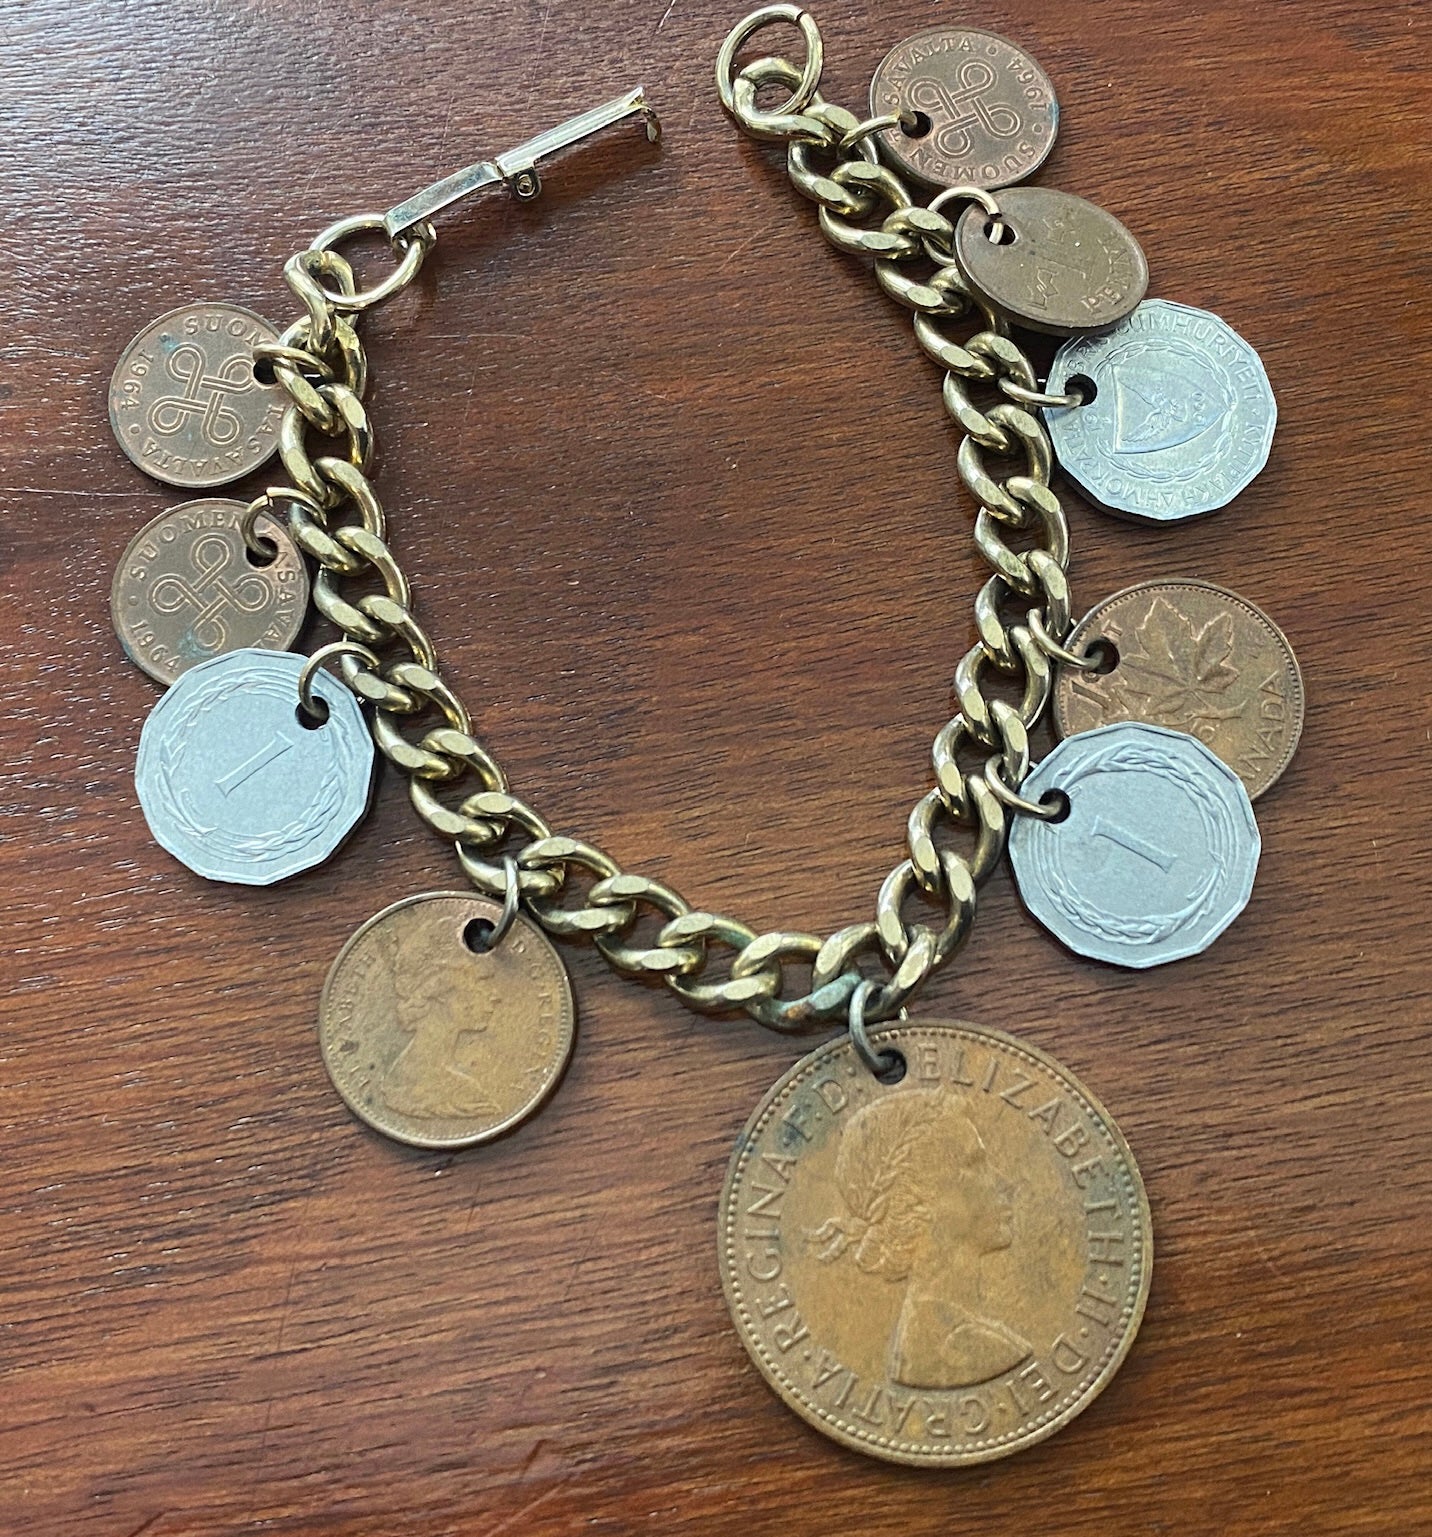 1960's British Coin Bracelet